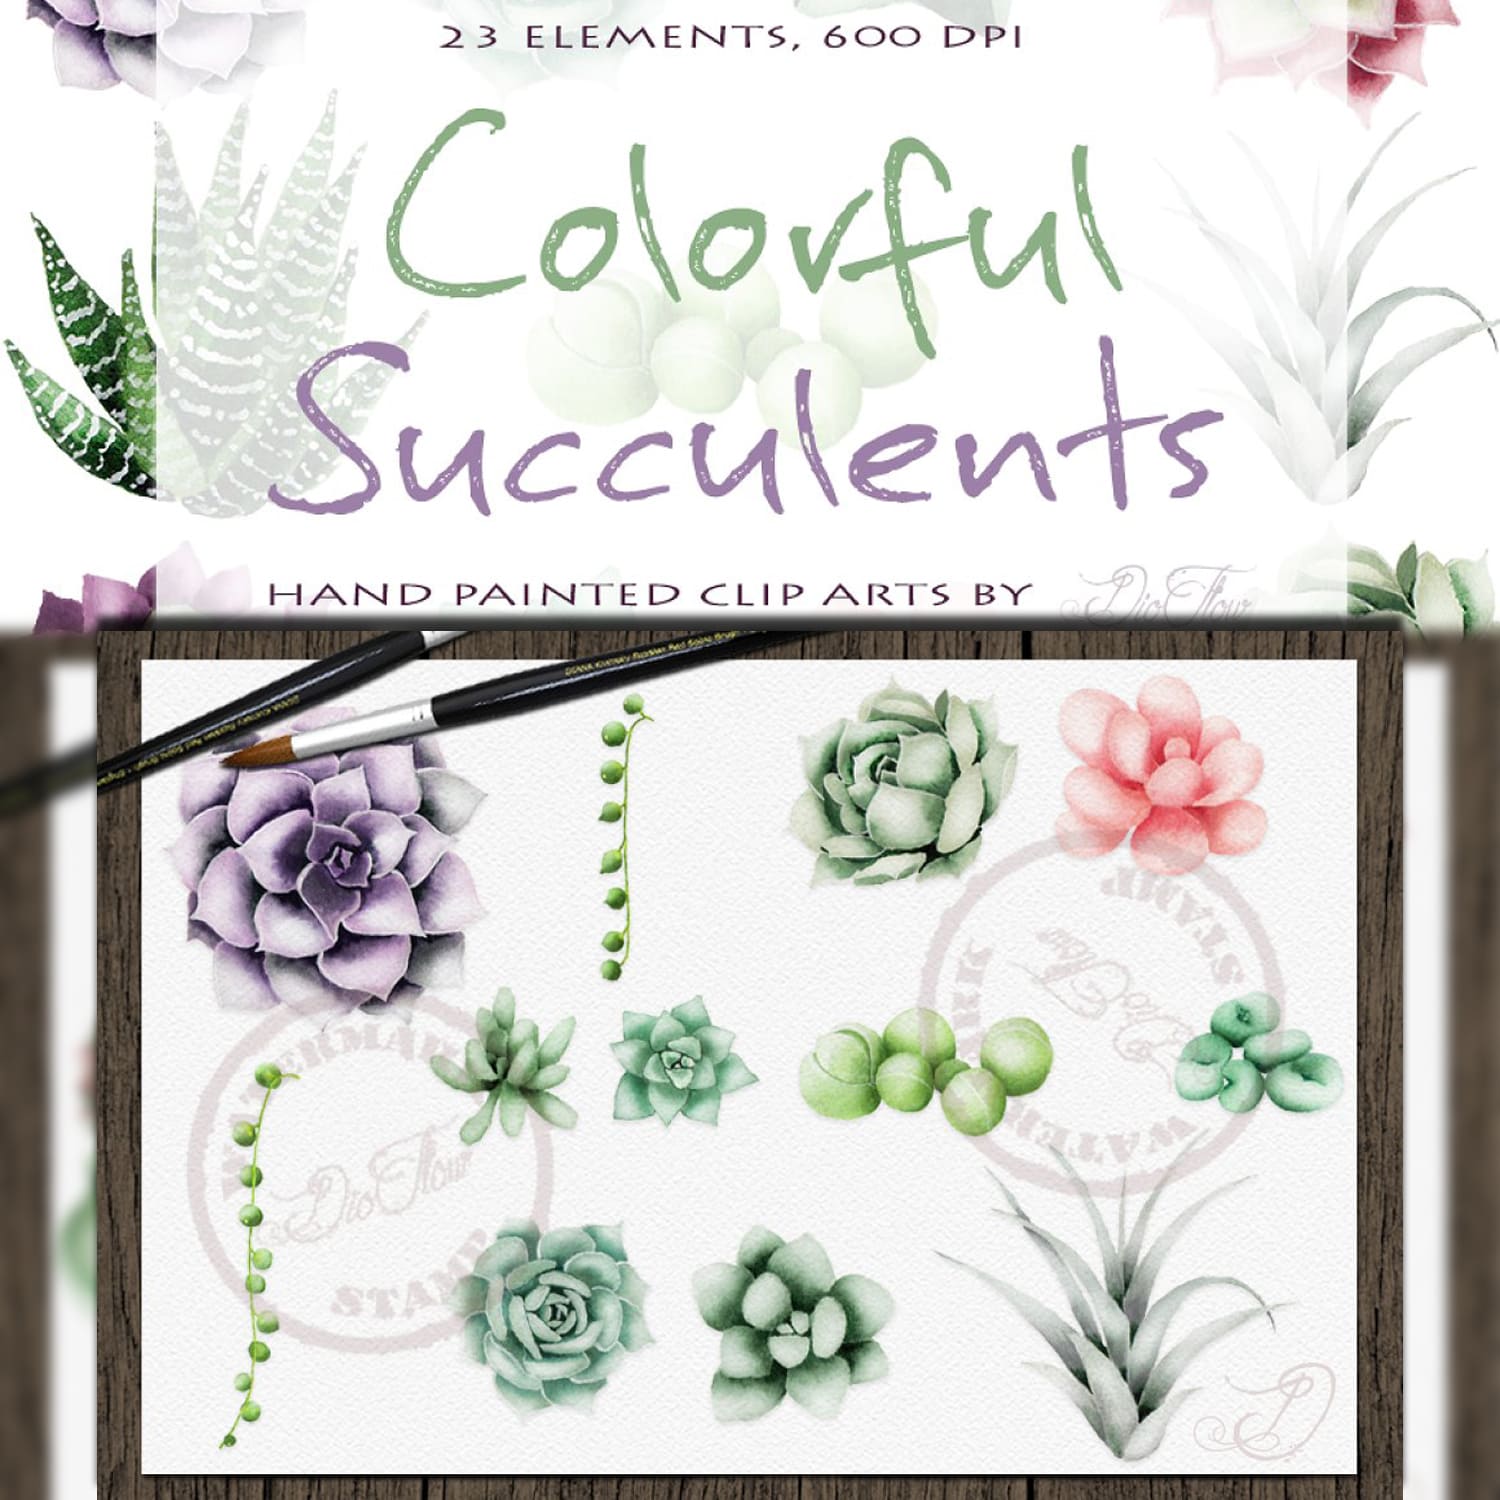 Succulent Watercolor Clipart cover.